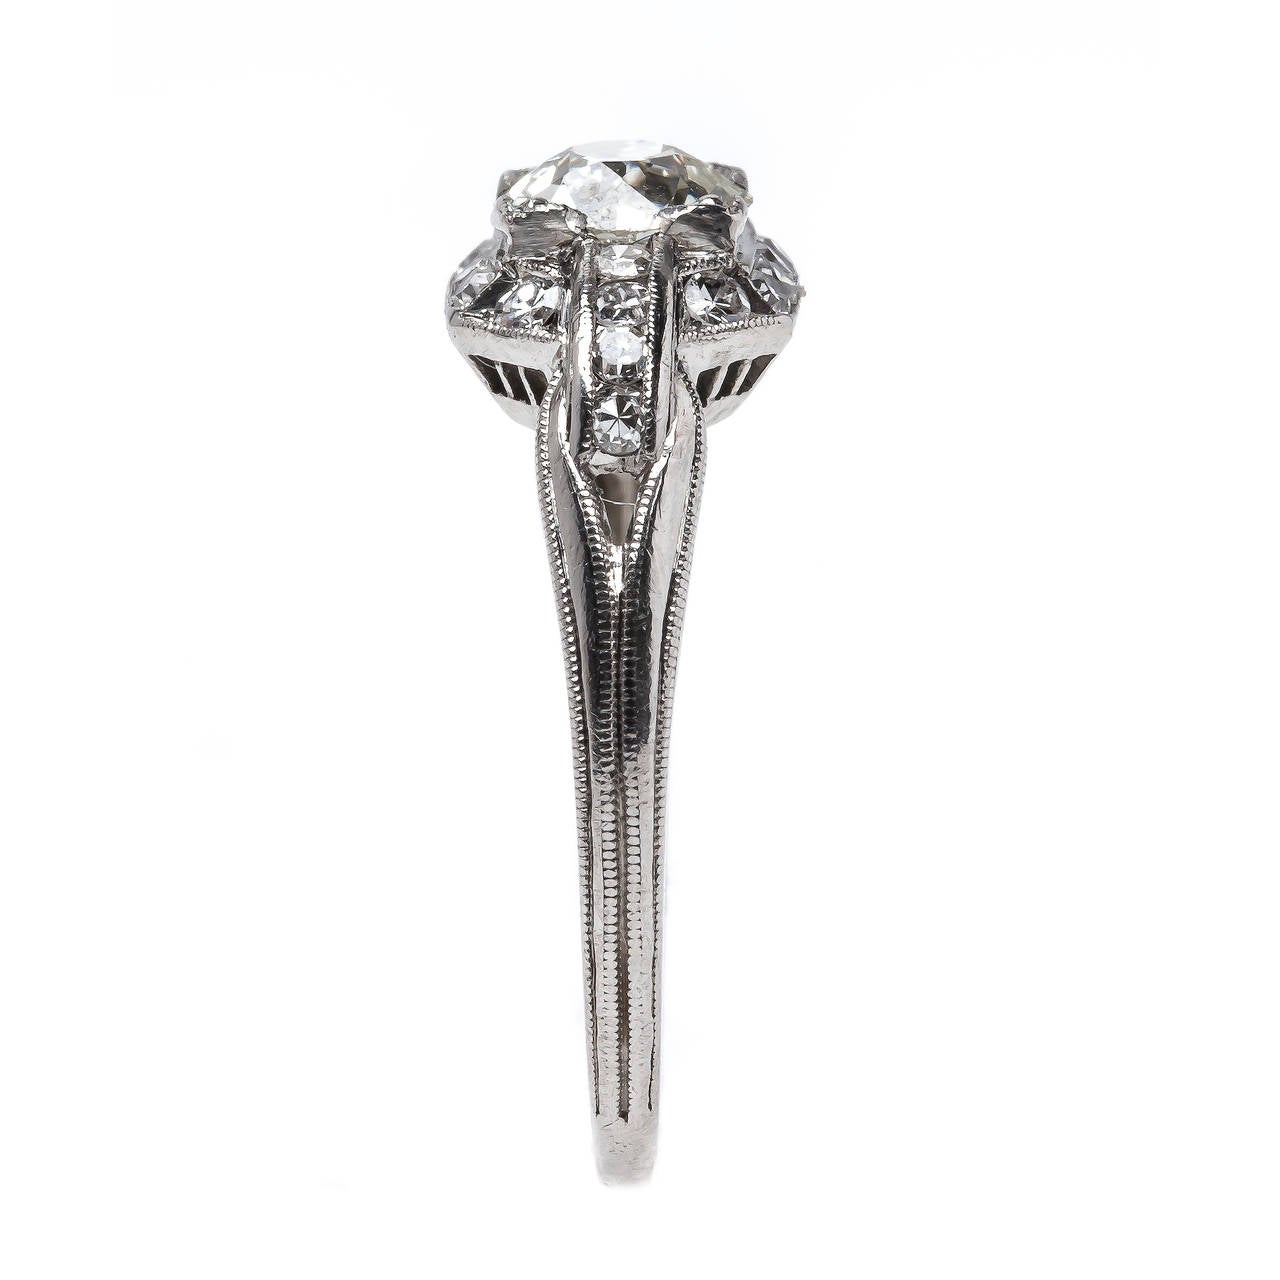 Art Deco Era Platinum Ring with Old European Cut Diamond Center and Diamond Halo 1